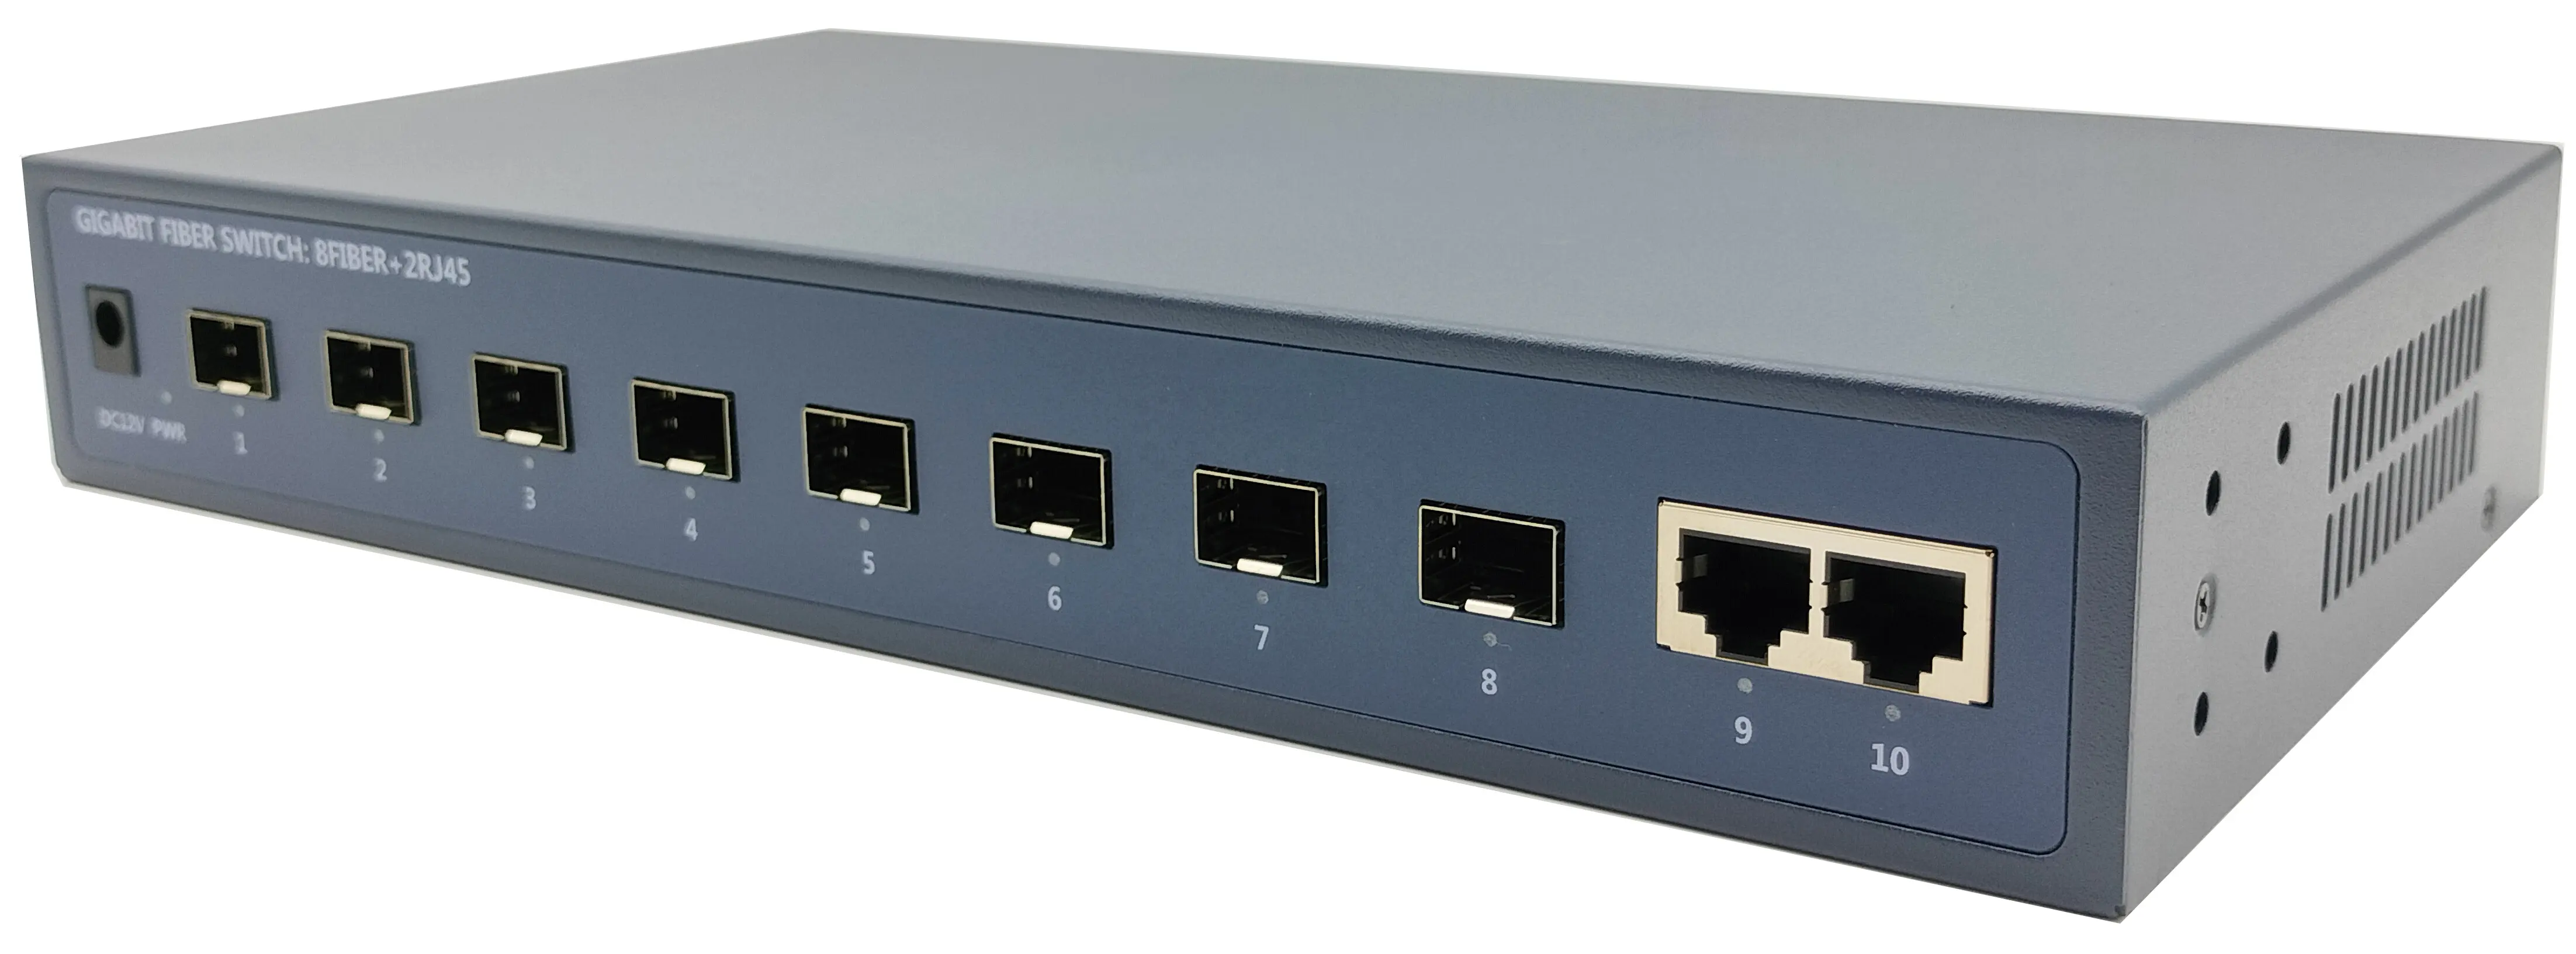 Interruttore di aggregazione 8-10/100/1000M fibra ottica con interruttore Ethernet DeskTop 2 Gigabit RJ45 Uplink